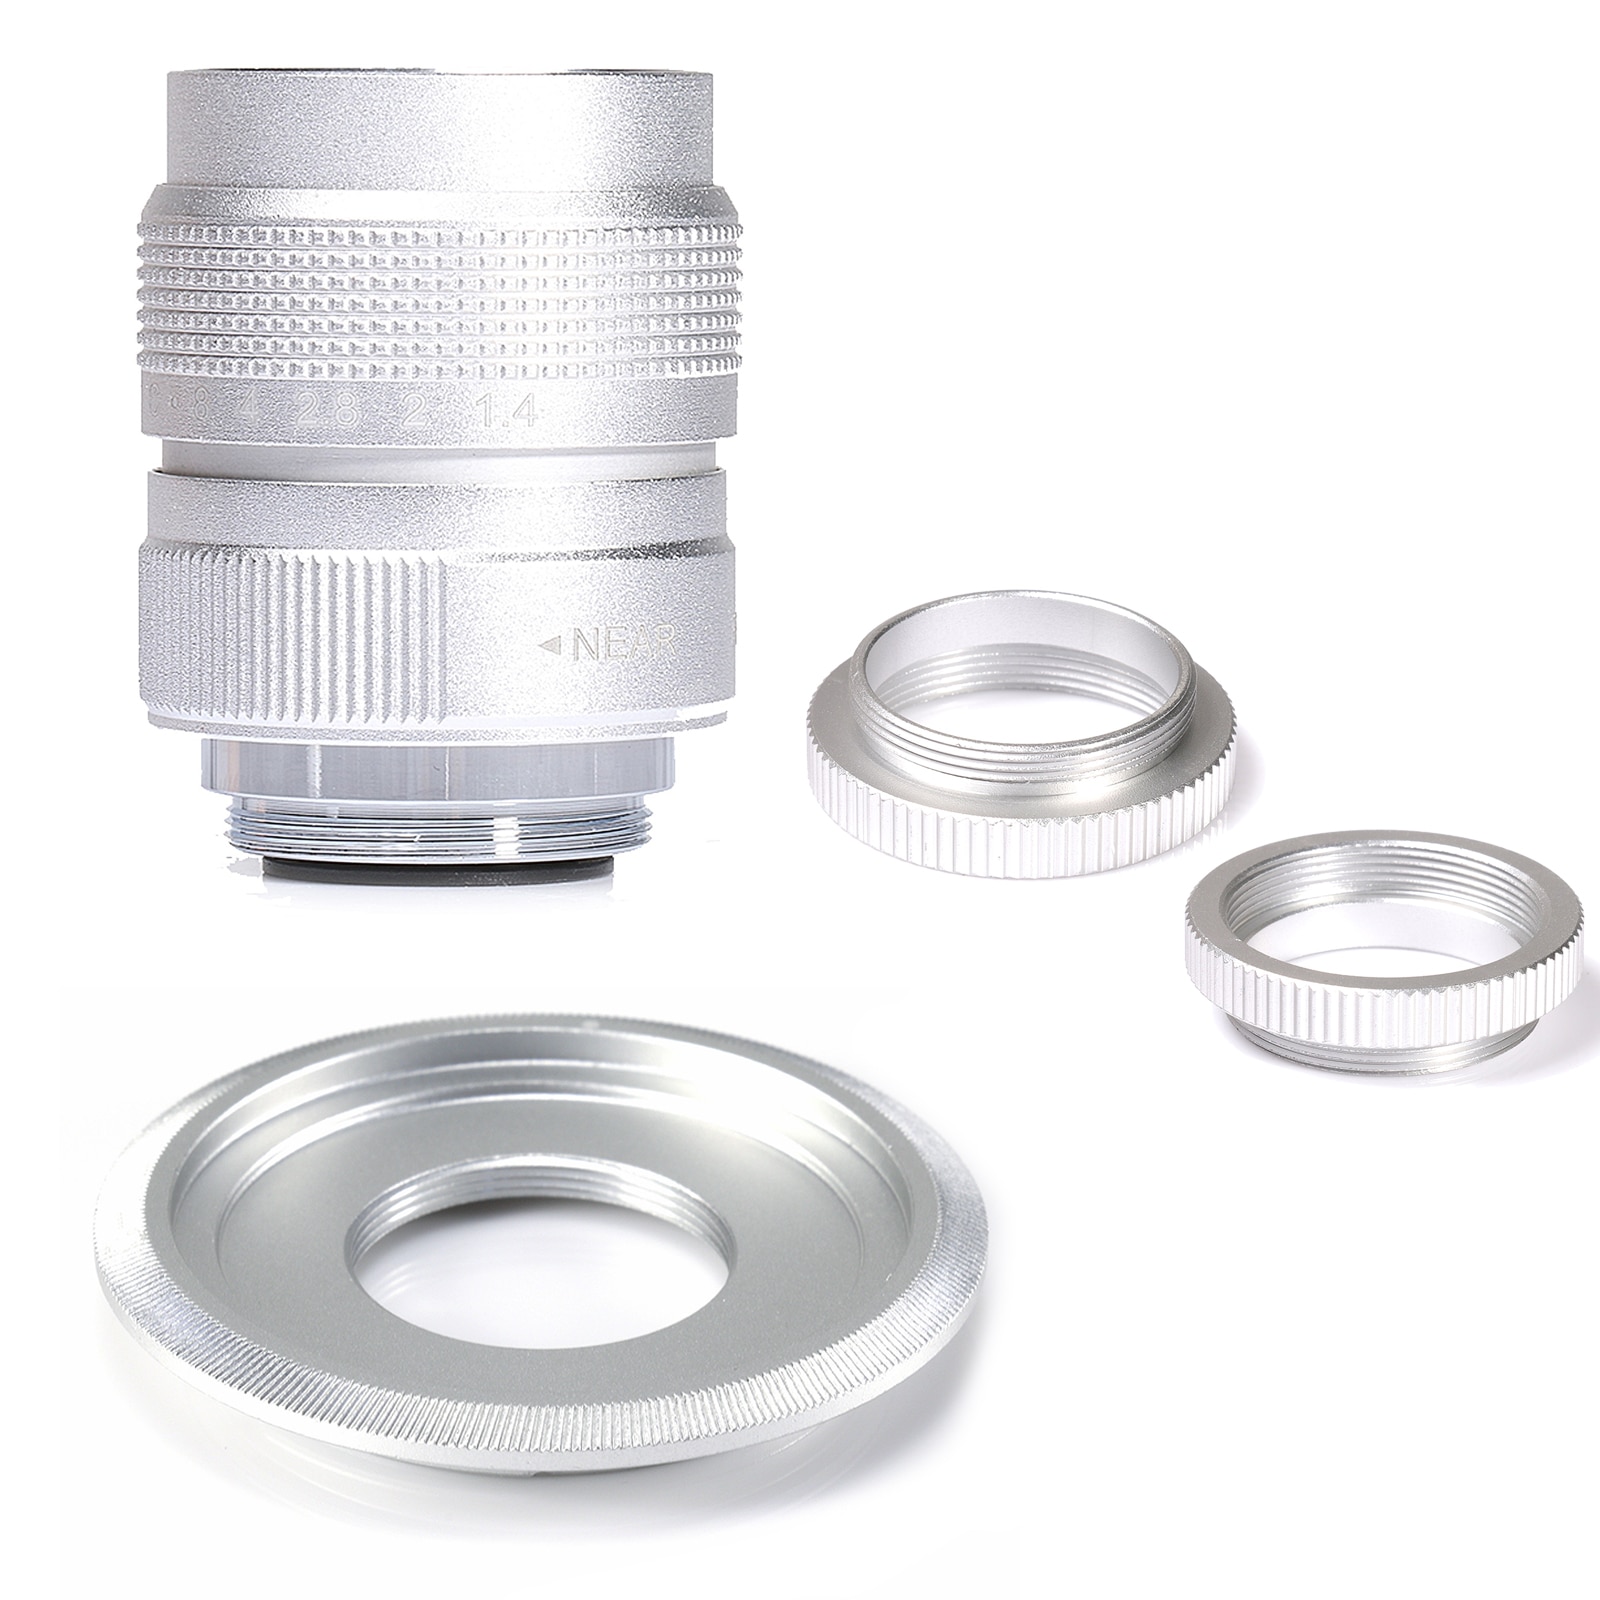 Sølv fujian 25mm f /1.4 aps-c cctv-linse + adapterring +2 makro ring til sony nex mirroless kamera  a5300/a6000/a6300/a7/a7ii/a9